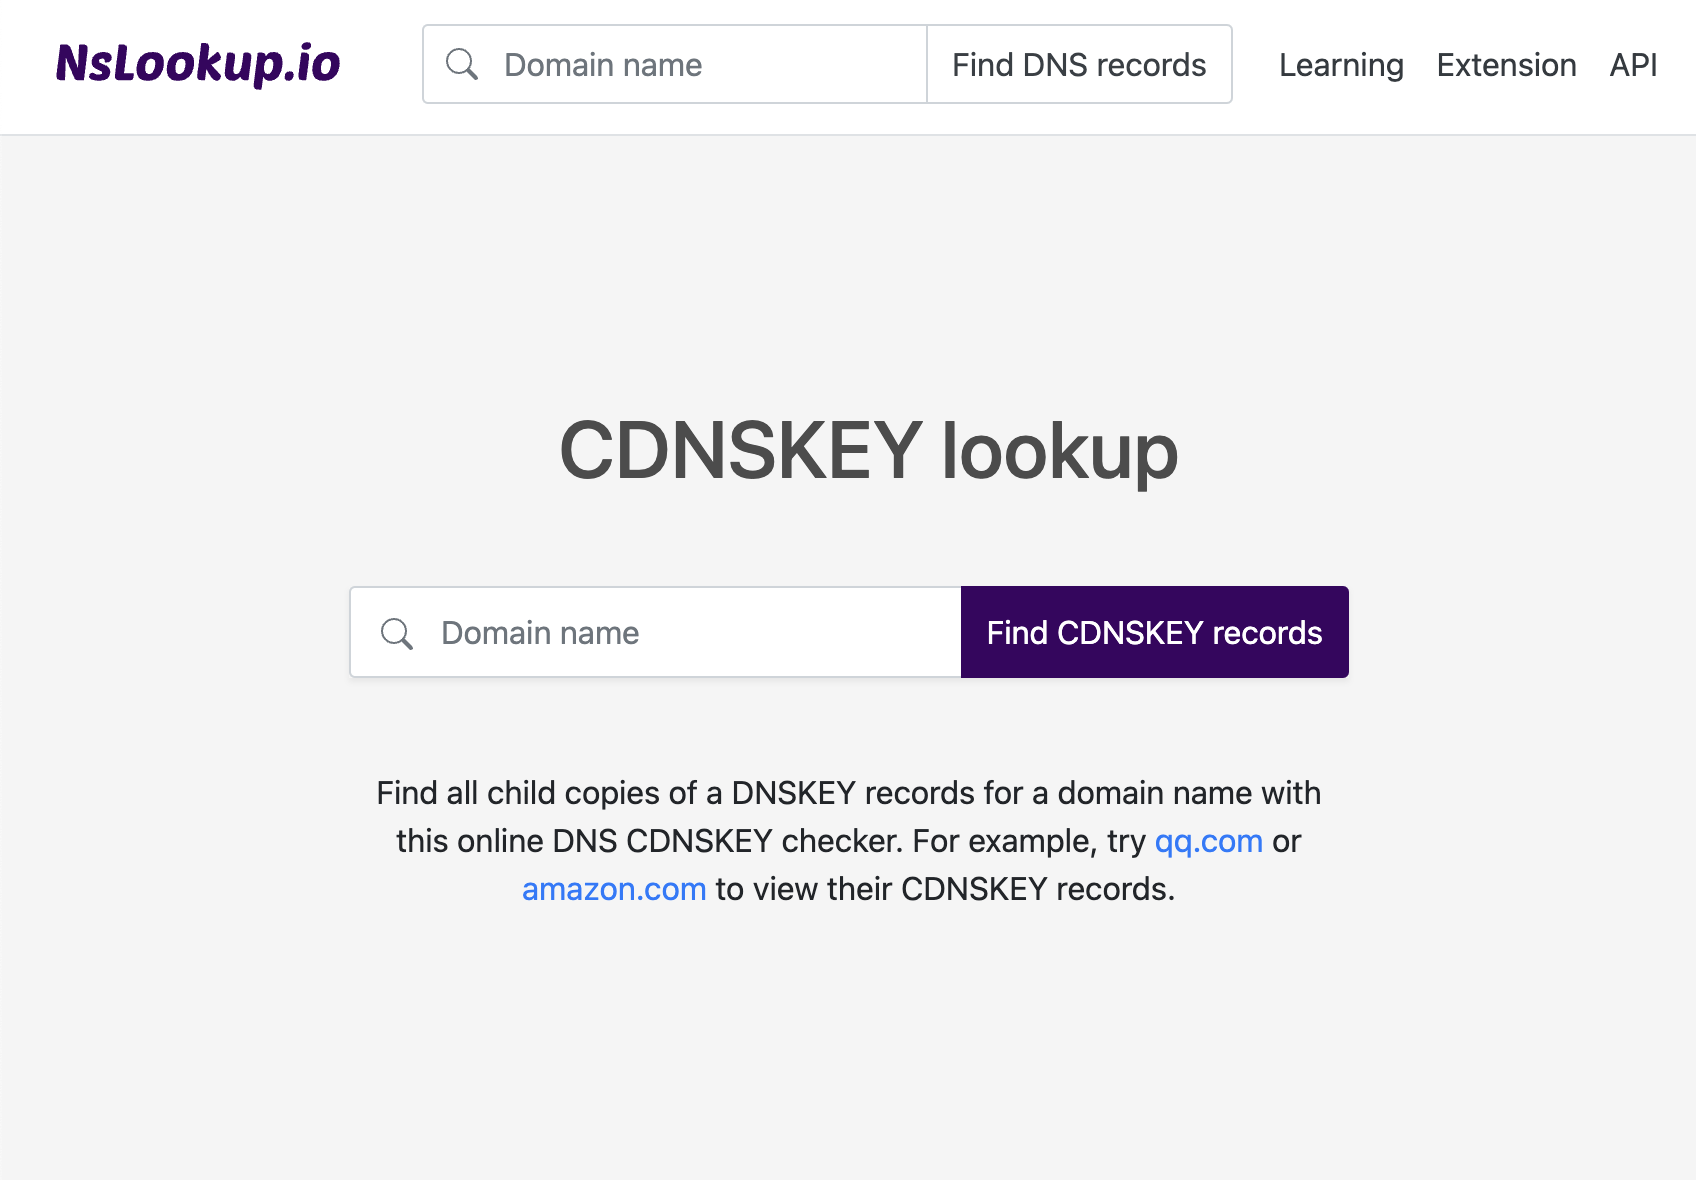 Open the CDNSKEY lookup tool